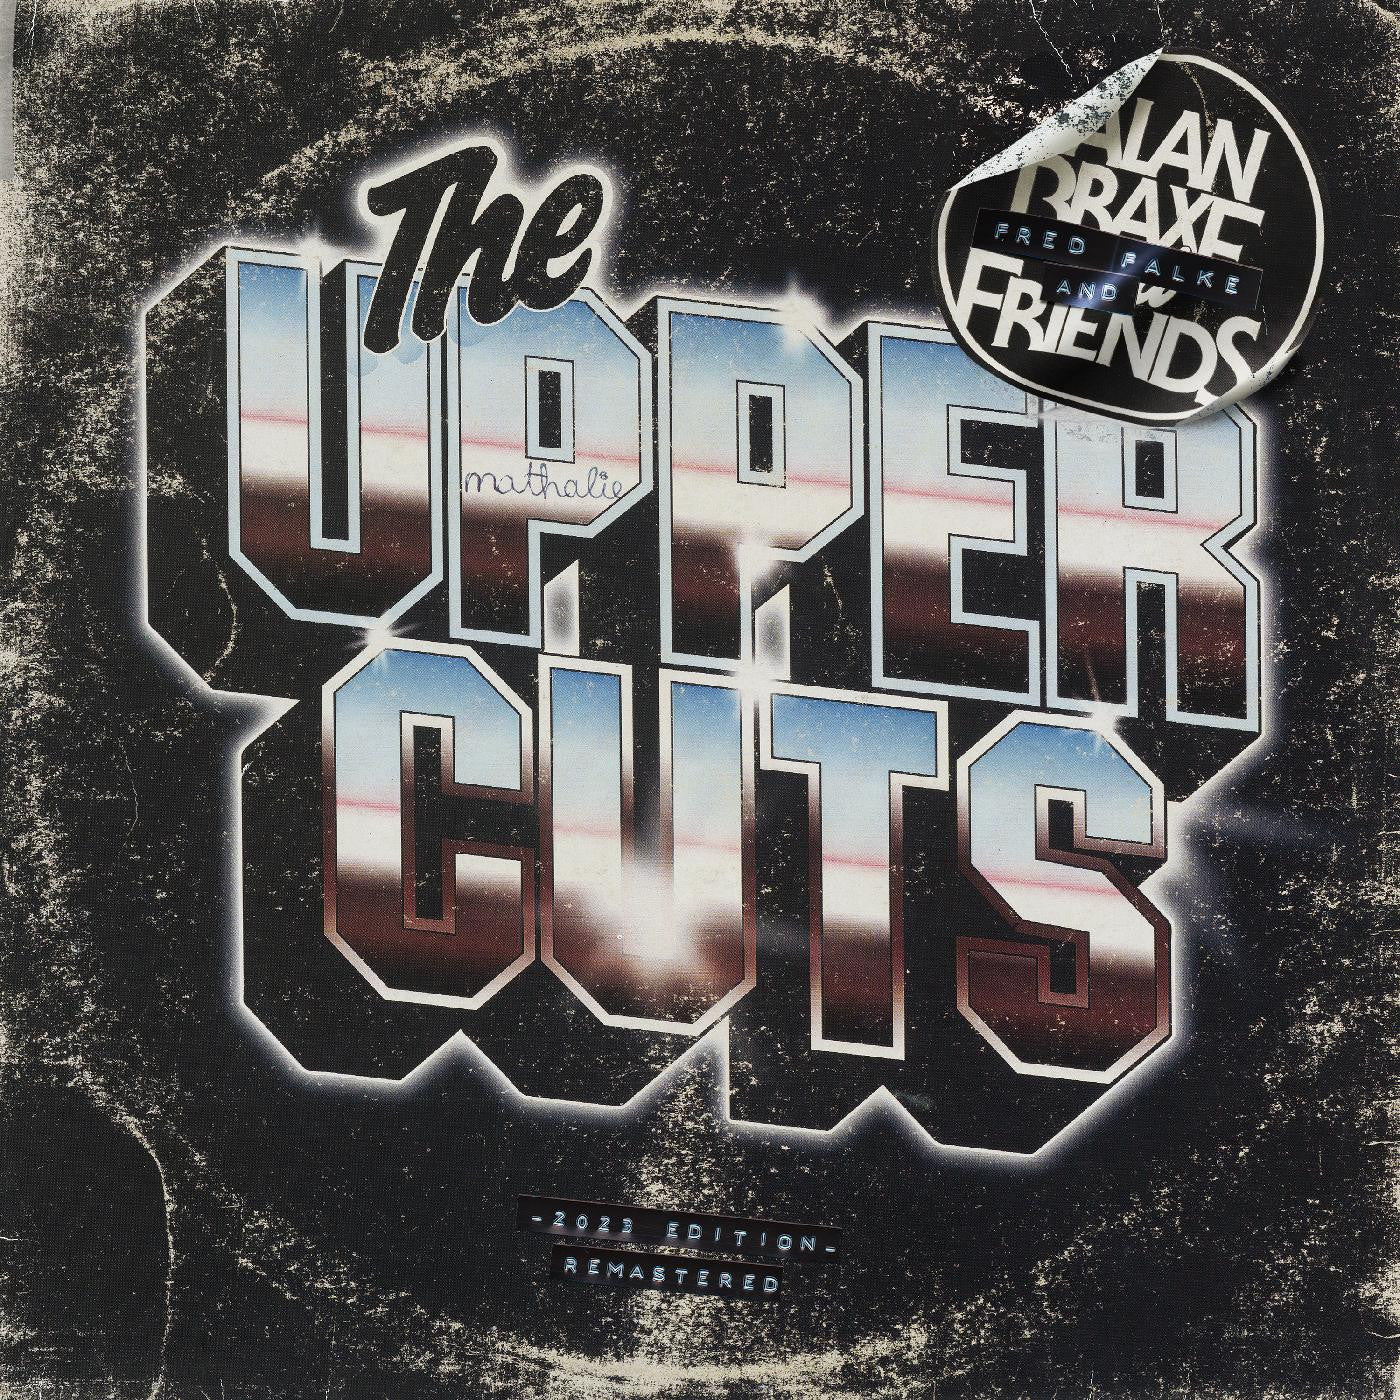 Alan Braxe, Fred Falke & Friends - The Upper Cuts (2023 Edition) [Rose Pink Baby Blue Vinyl]